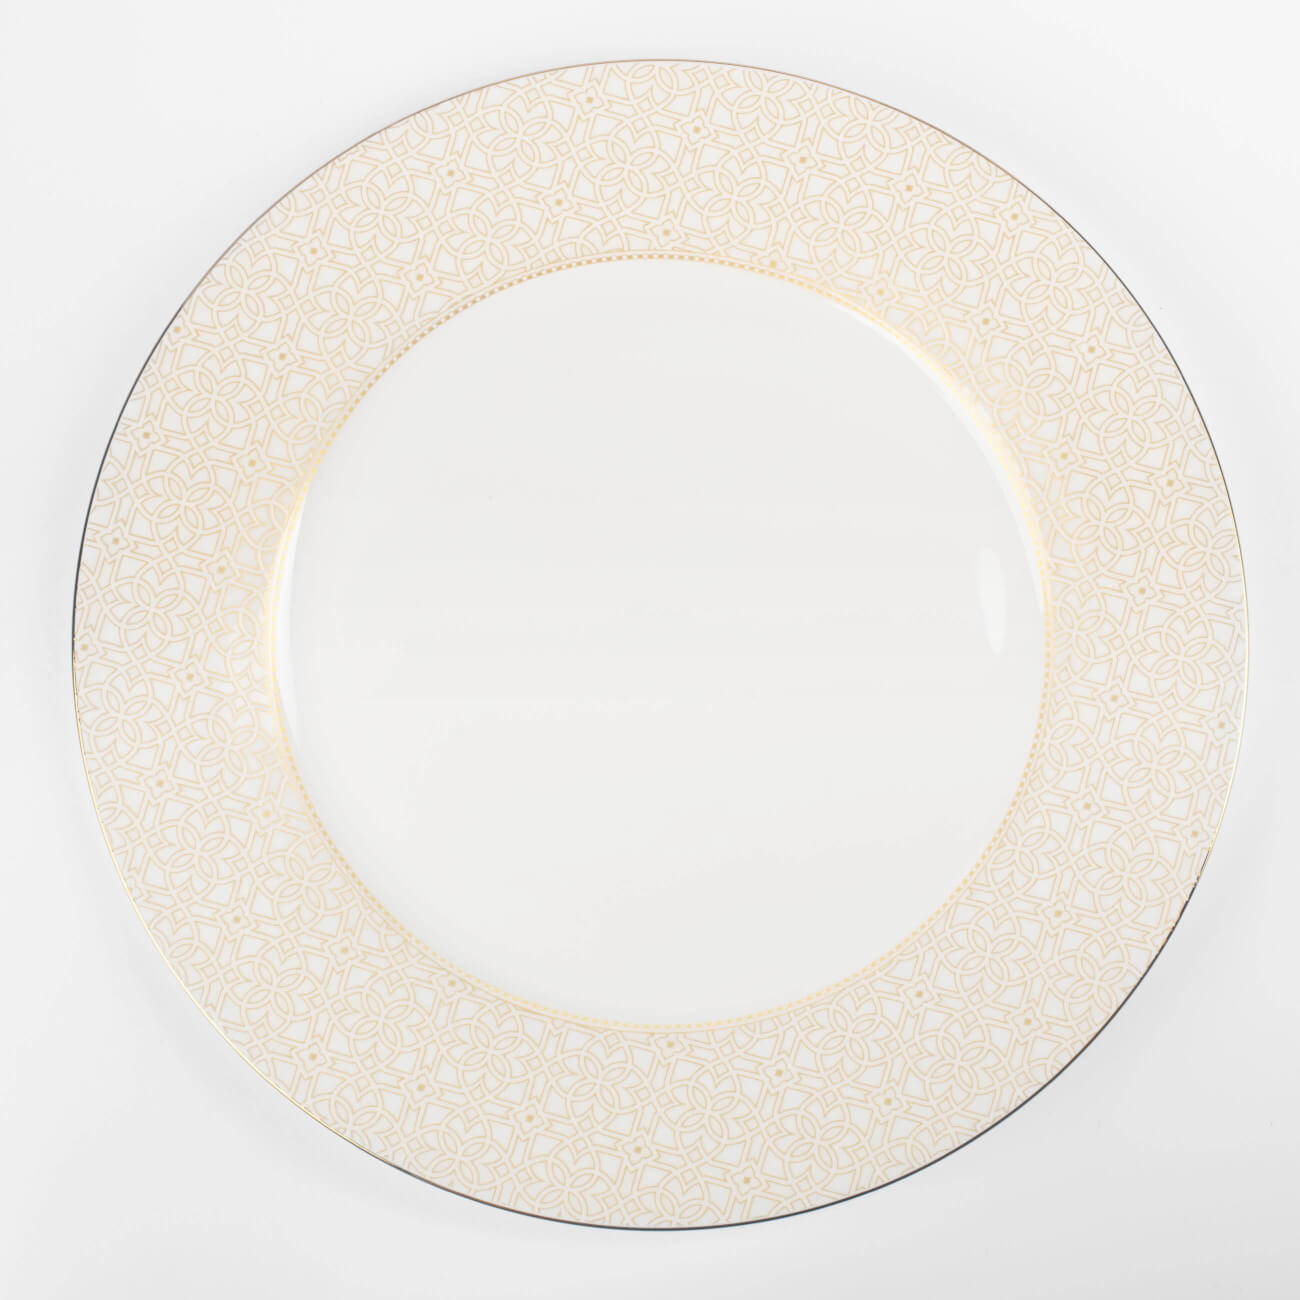 Тарелка обеденная, 27 см, фарфор F, с золотистым кантом, Орнамент, Liberty тарелка обеденная wedgwood wgw 40003894 гибискус 27 см